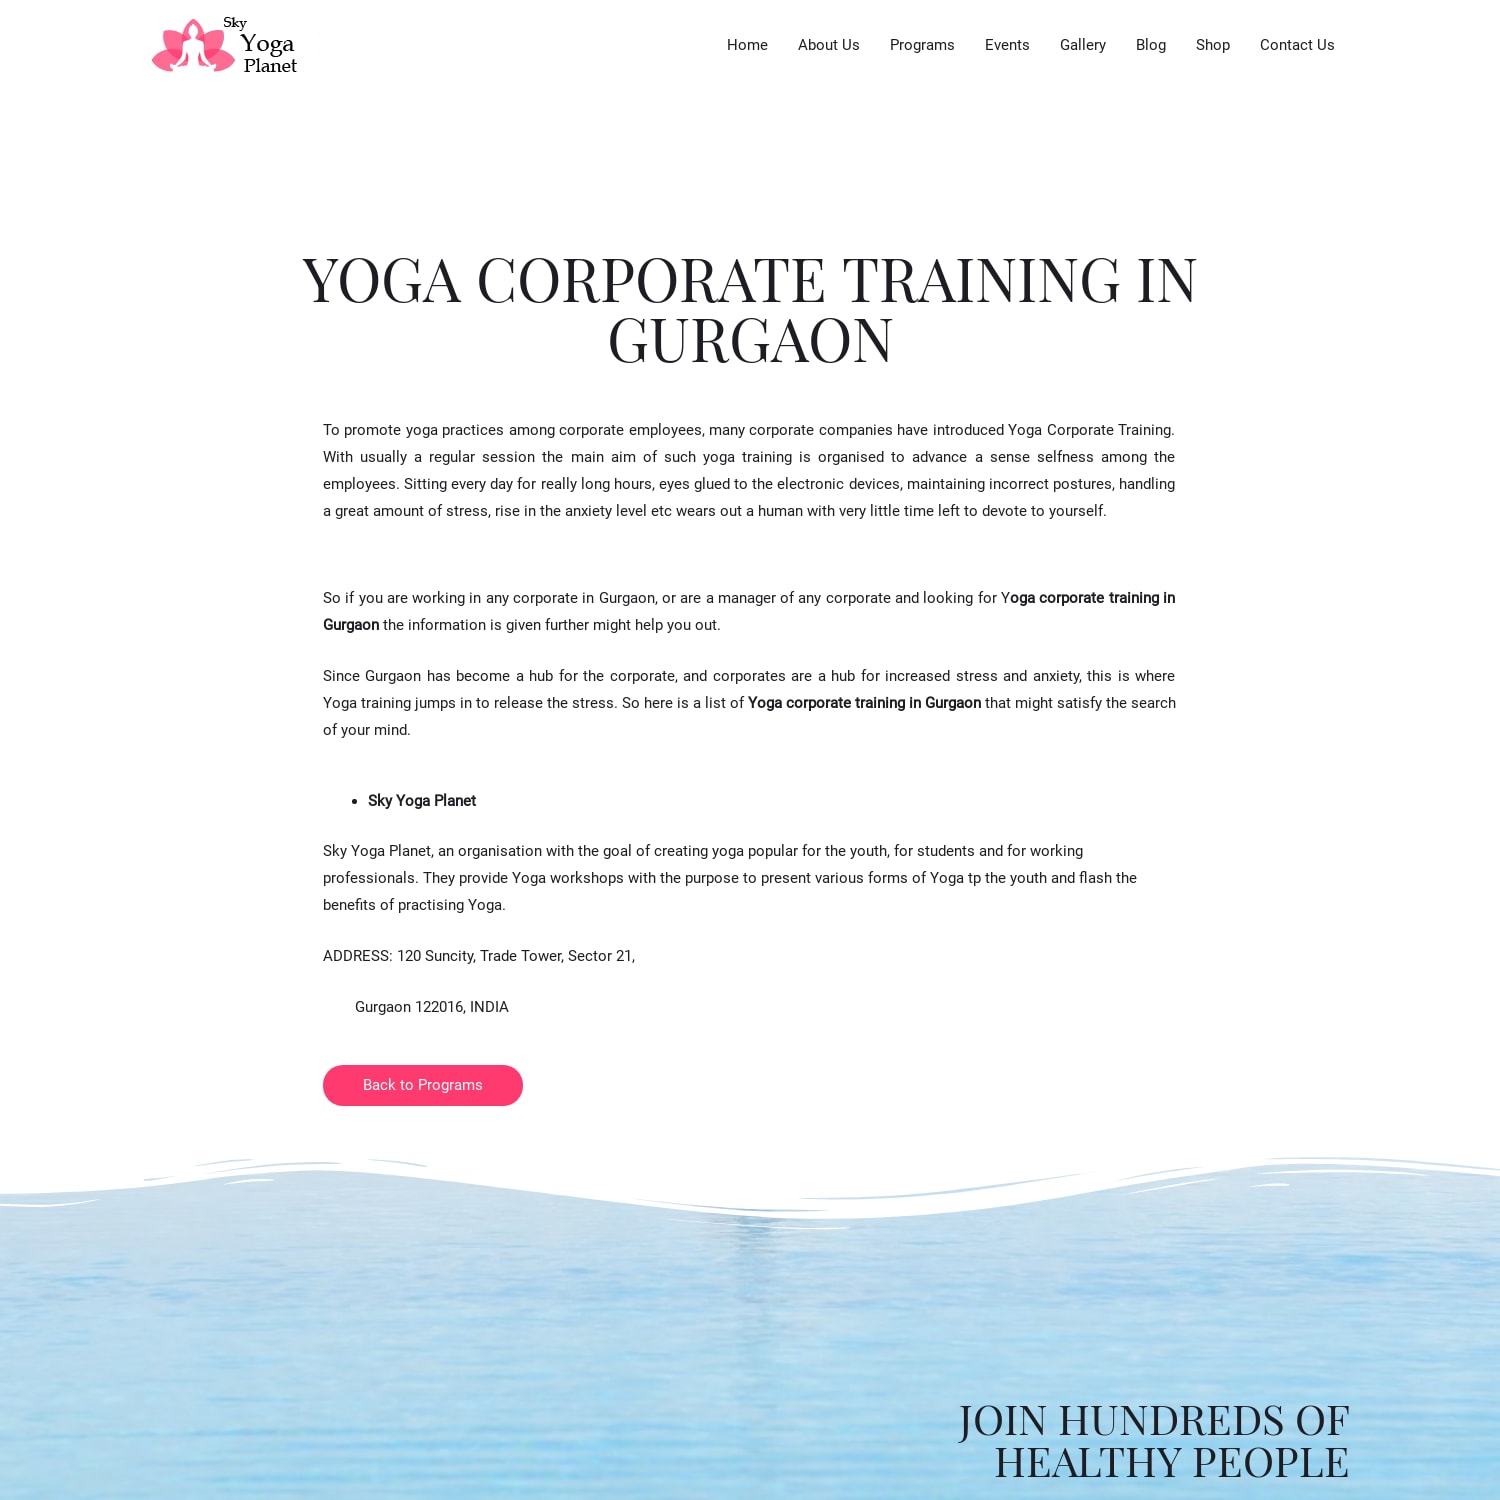 Yoga Corporate Training In Gurgaon - Yoga for Life